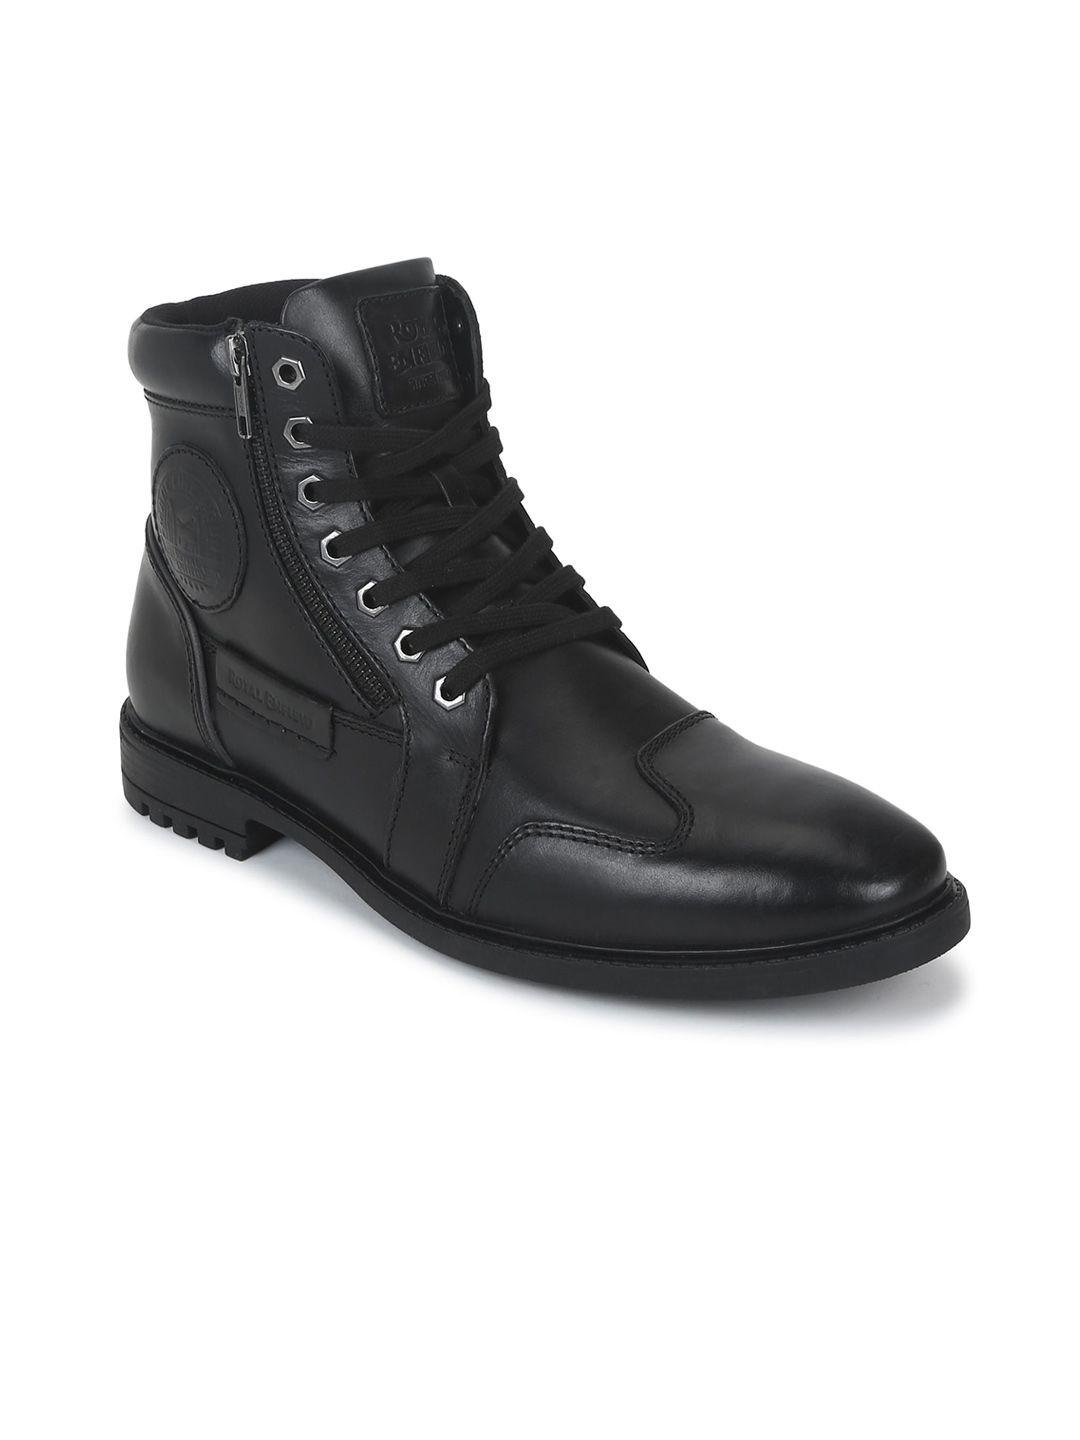 royal enfield men leather biker boots